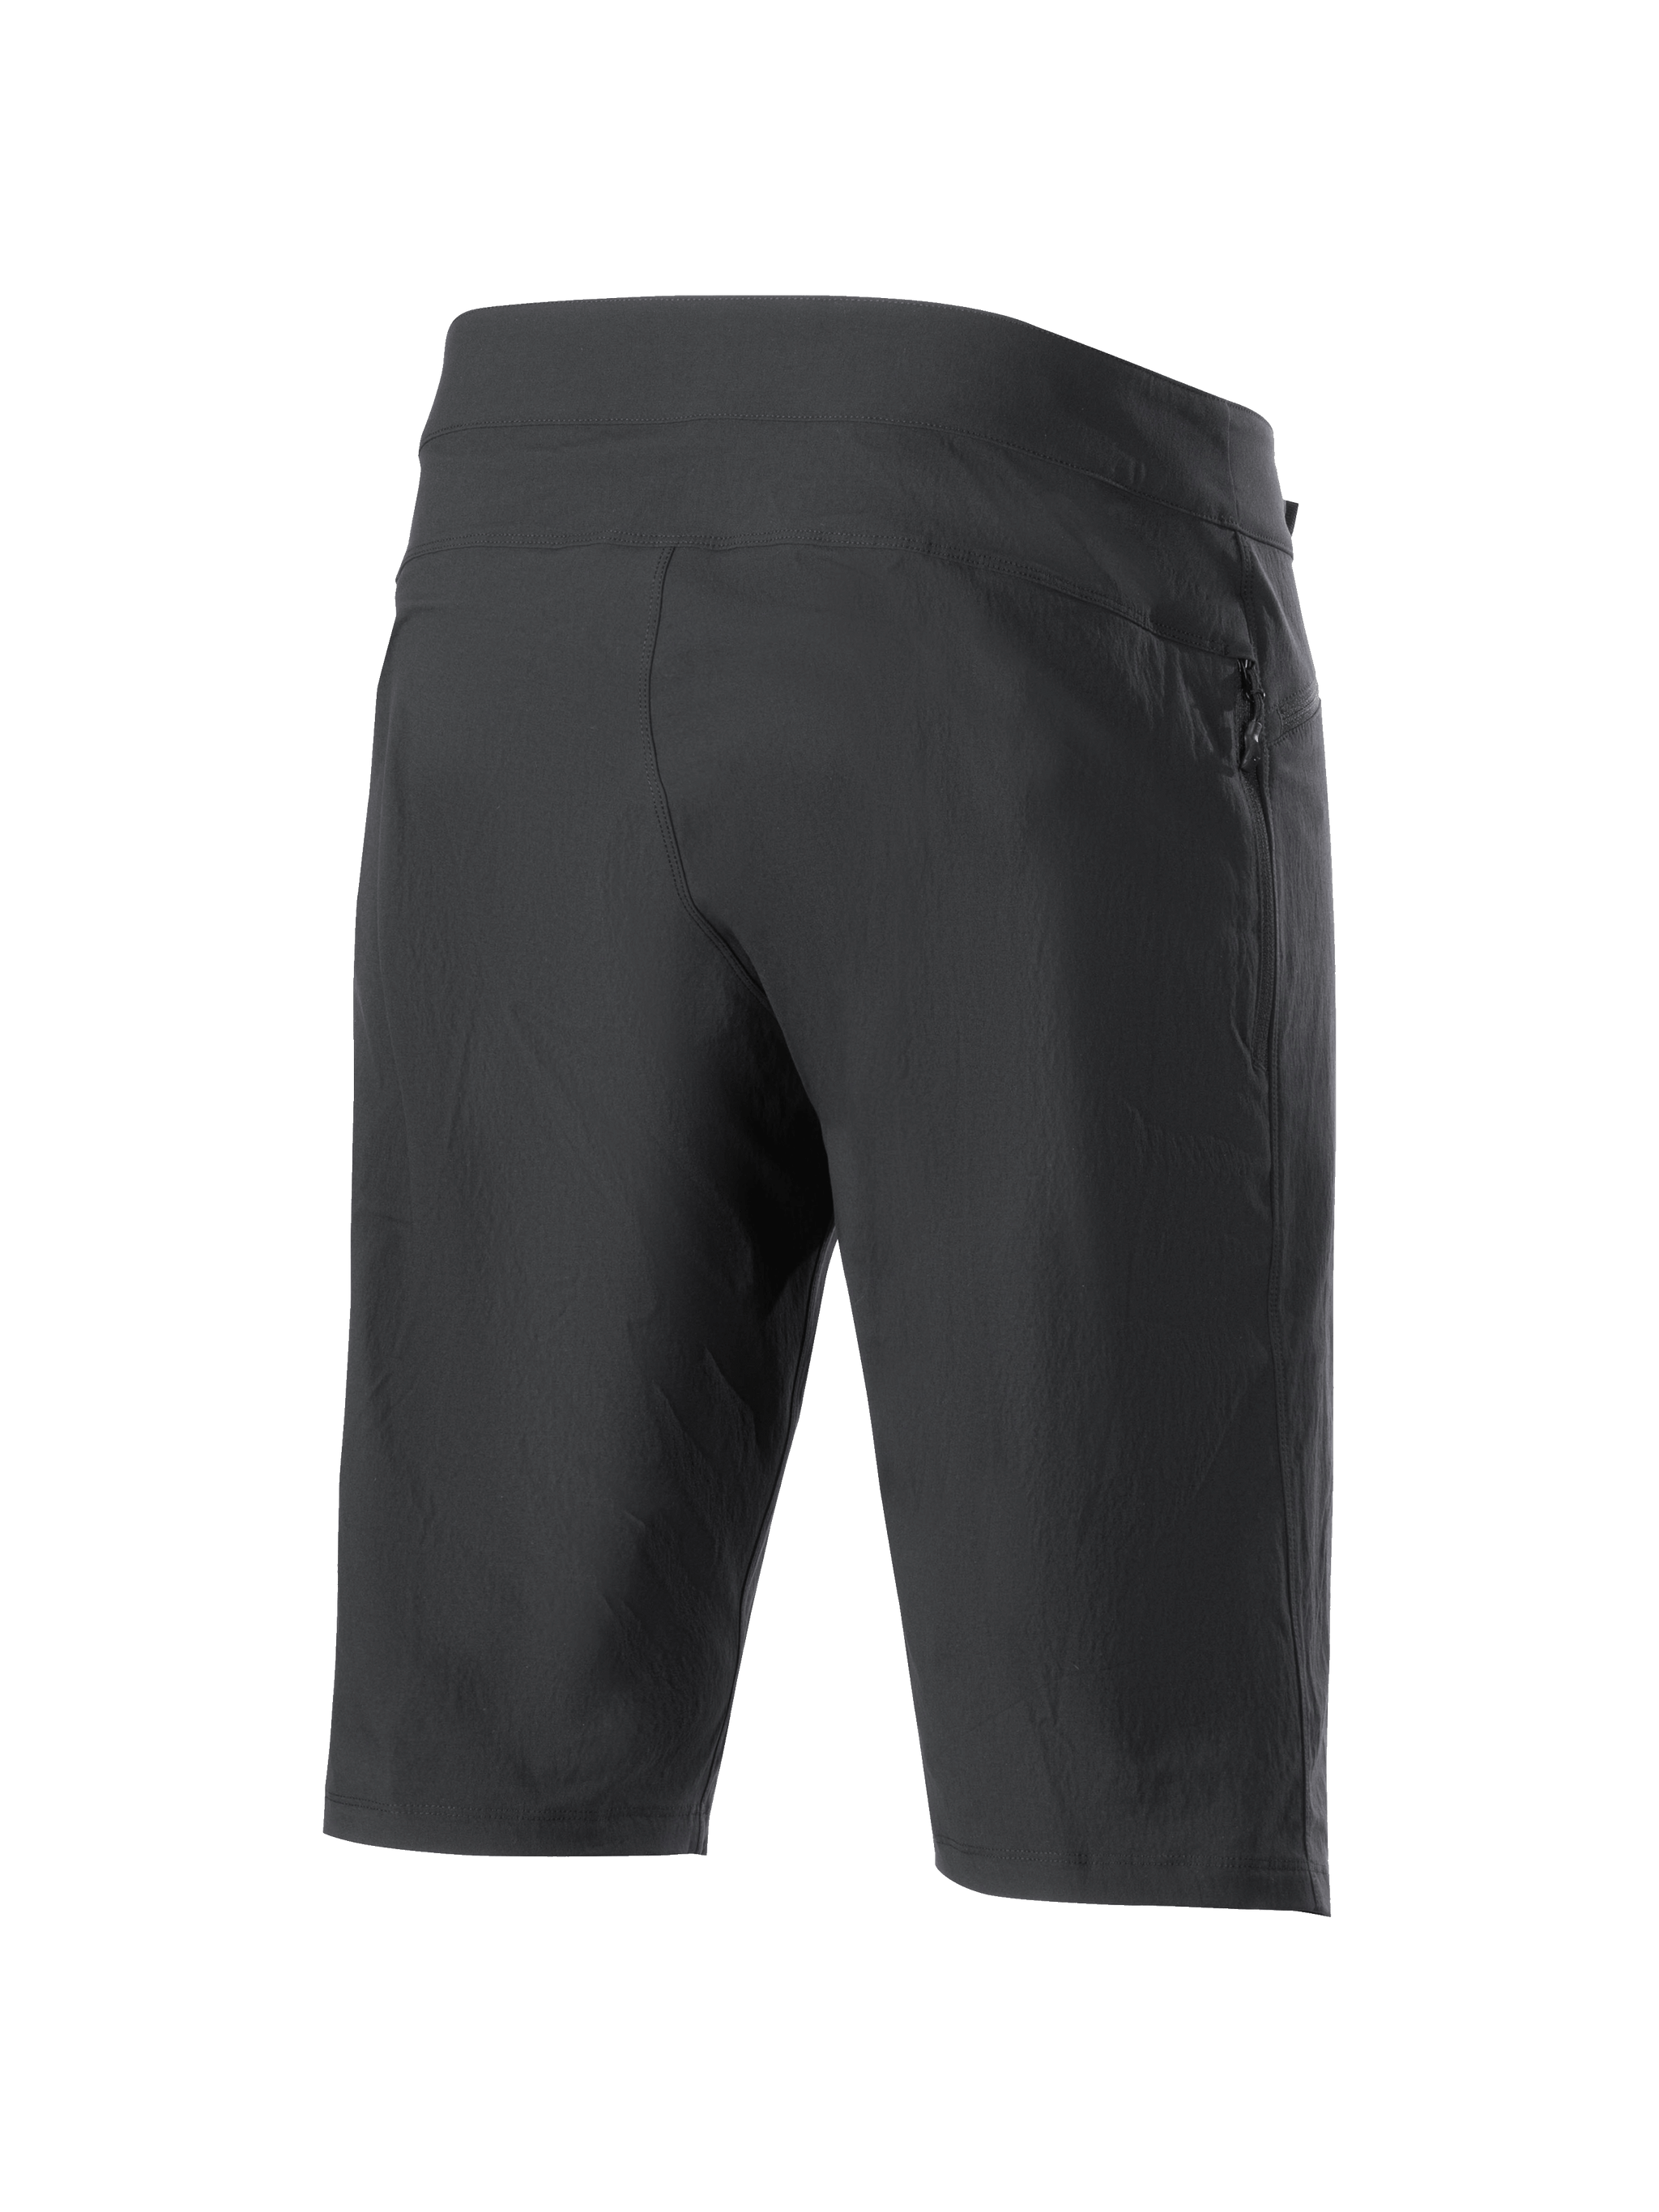 A-Dura Liner Shorts